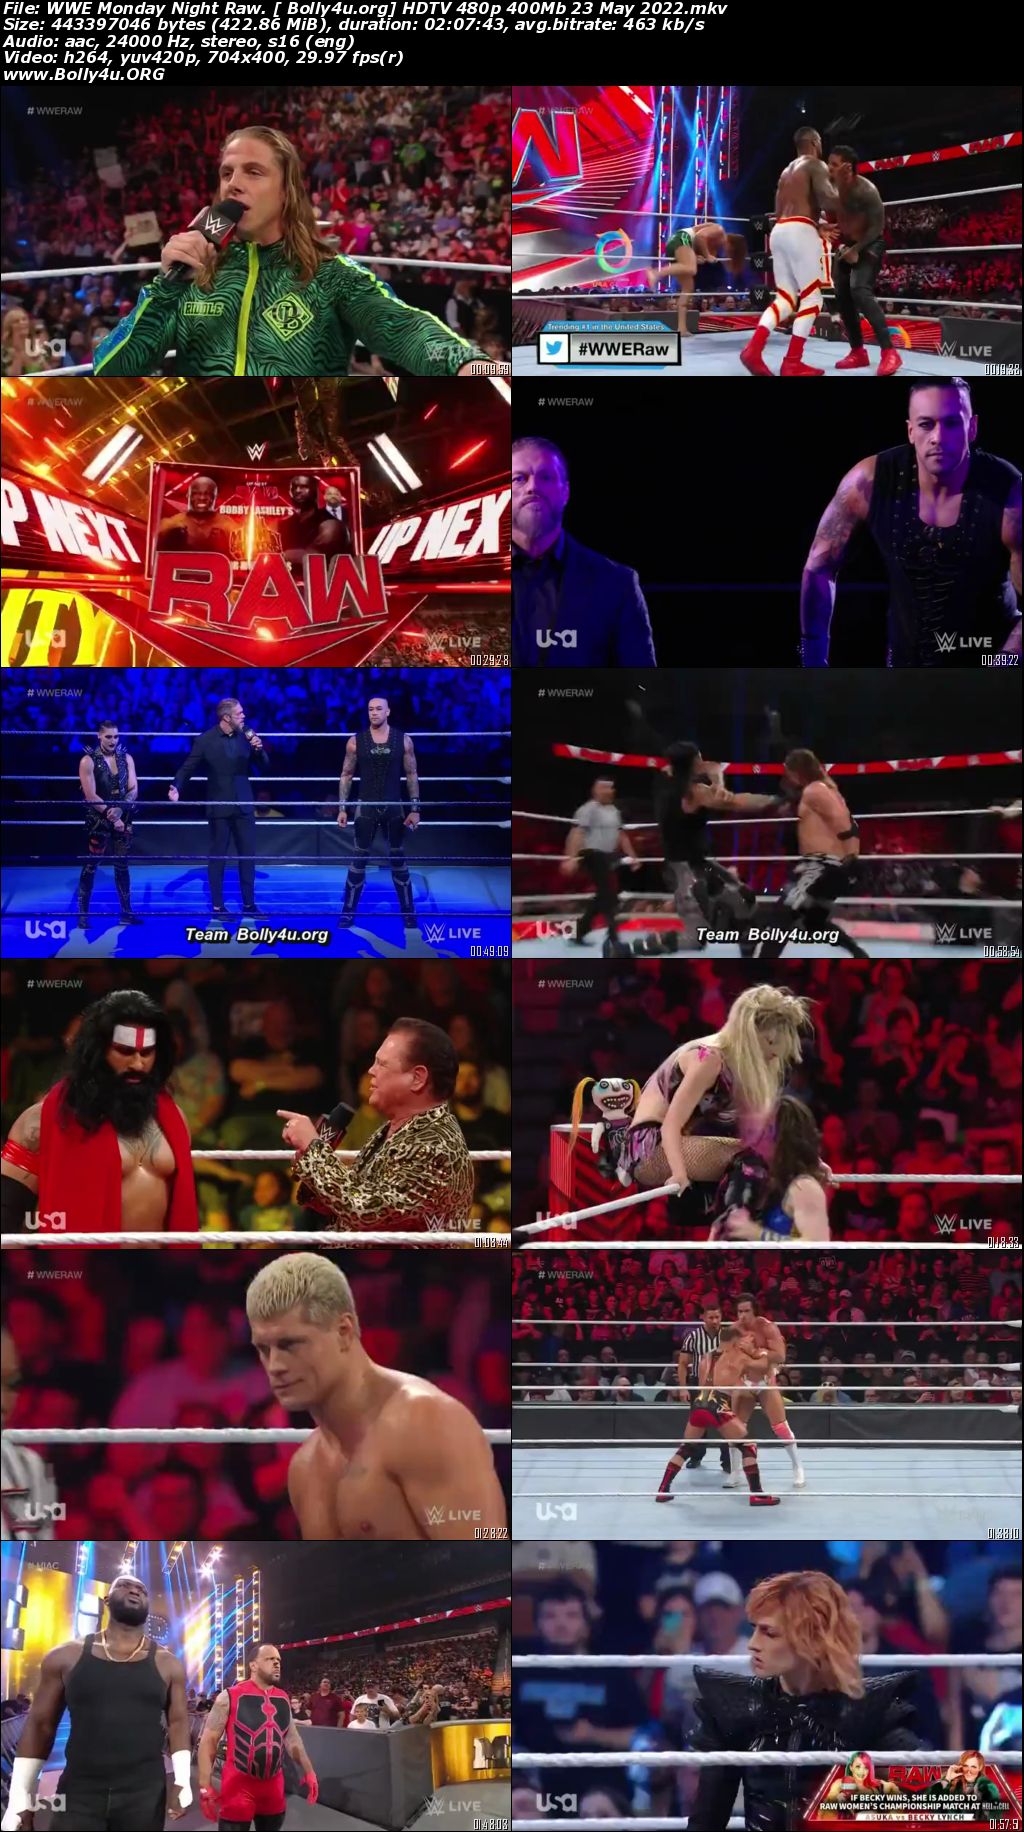 WWE Monday Night Raw HDTV 480p 400Mb 23 May 2022 Download